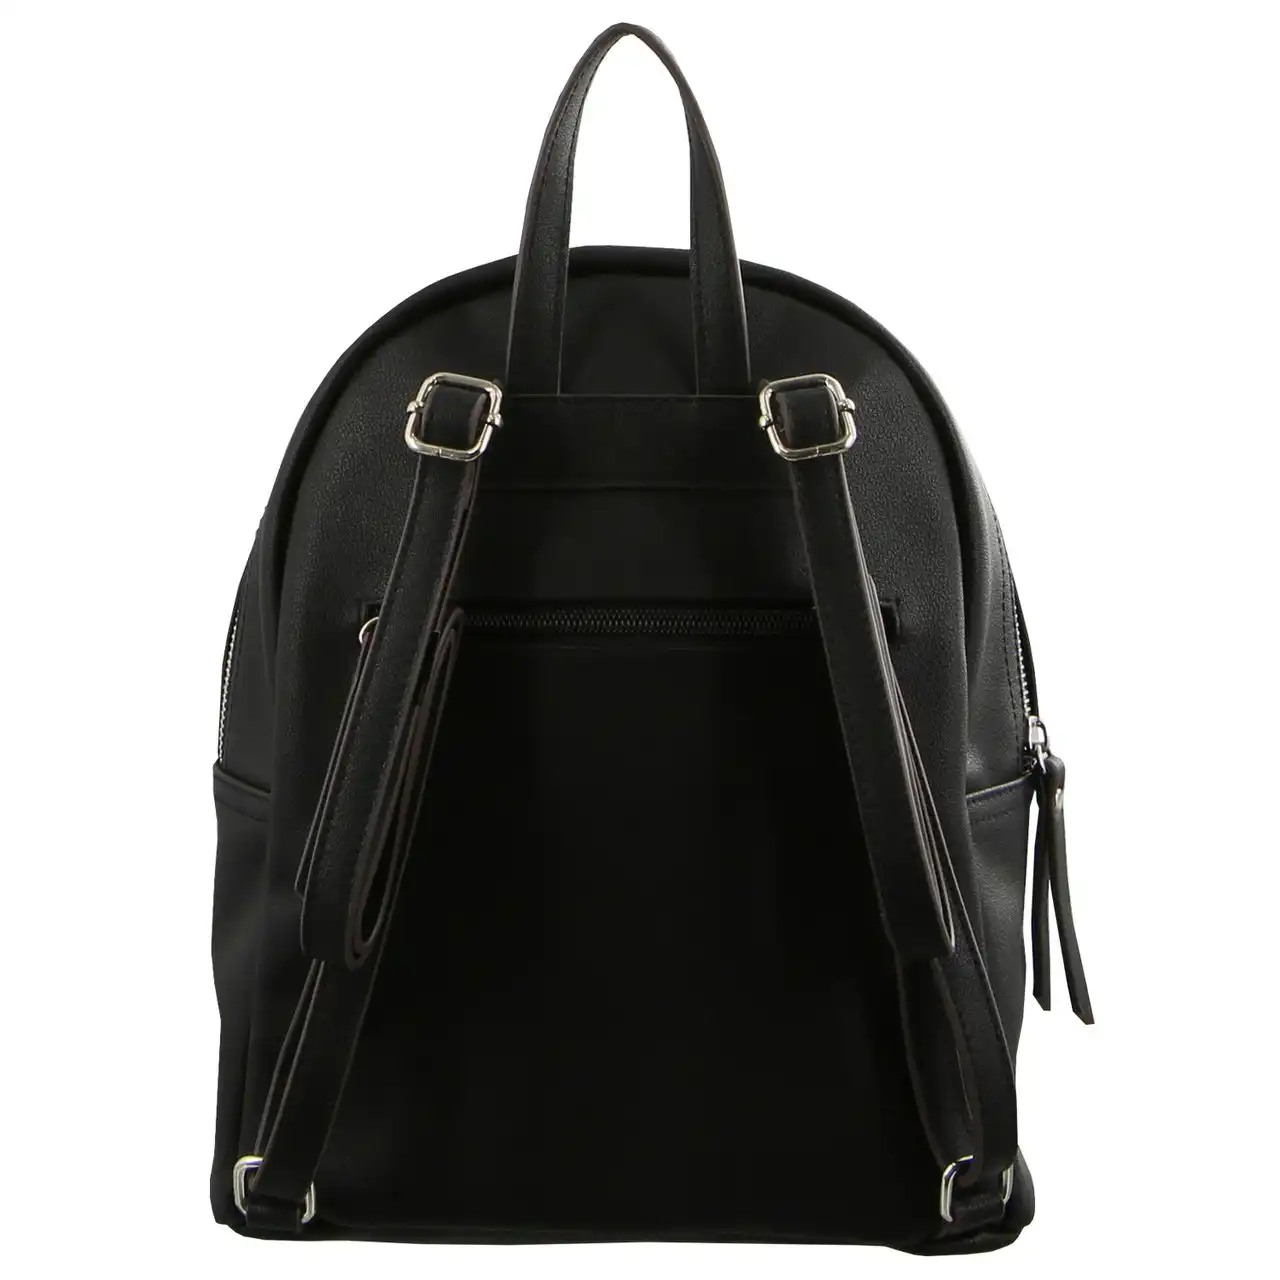 Milleni Fashion Ladies 27cm Backpack Outdoor Travel Work Bag w/ Bow Detail Black